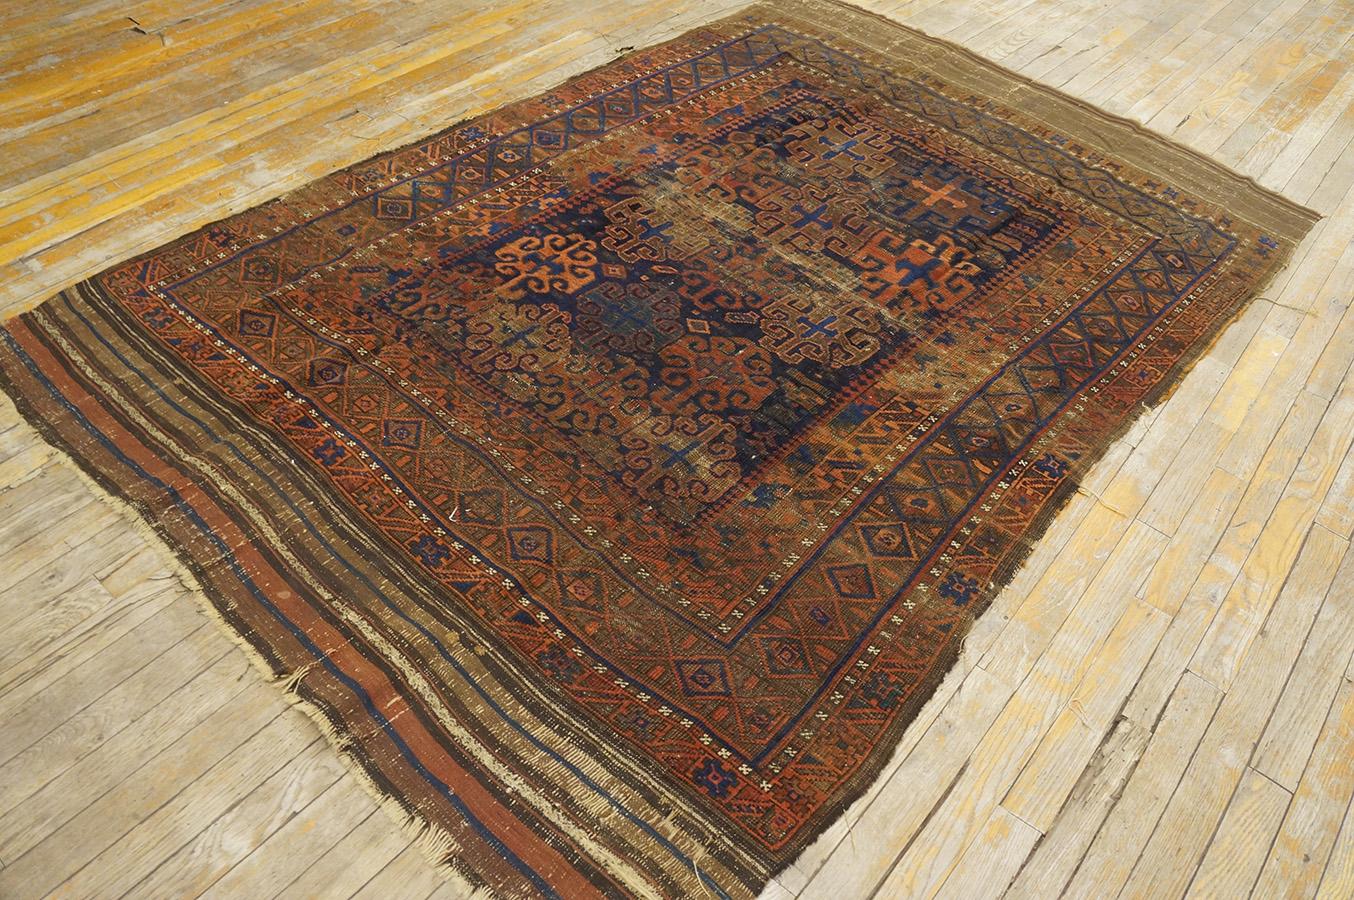 Late 19th Century 19th Century Afghan Baluch Main Carpet ( 5' x 7' - 152 x 213 cm ) For Sale